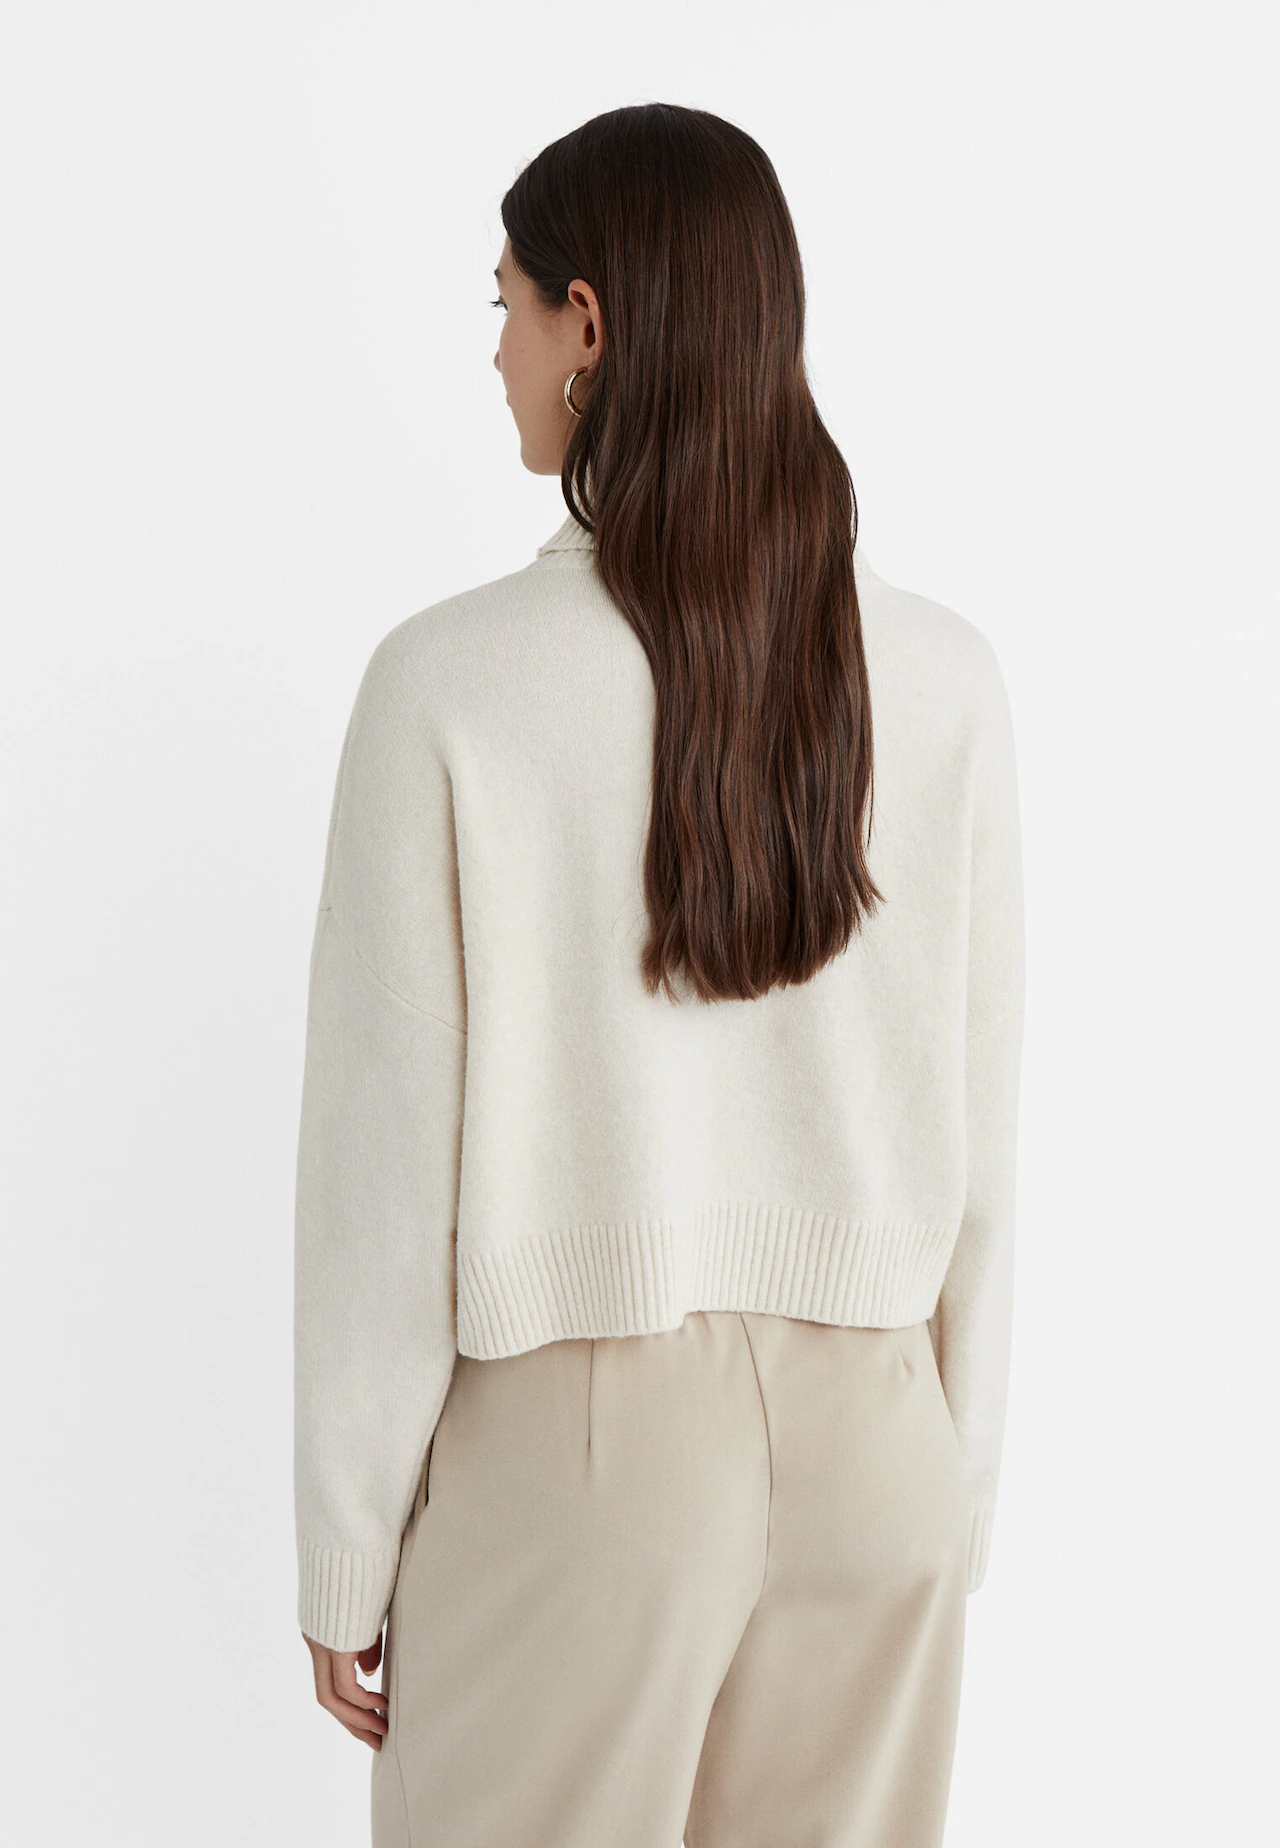 Soft-touch knit sweater - Women's fashion